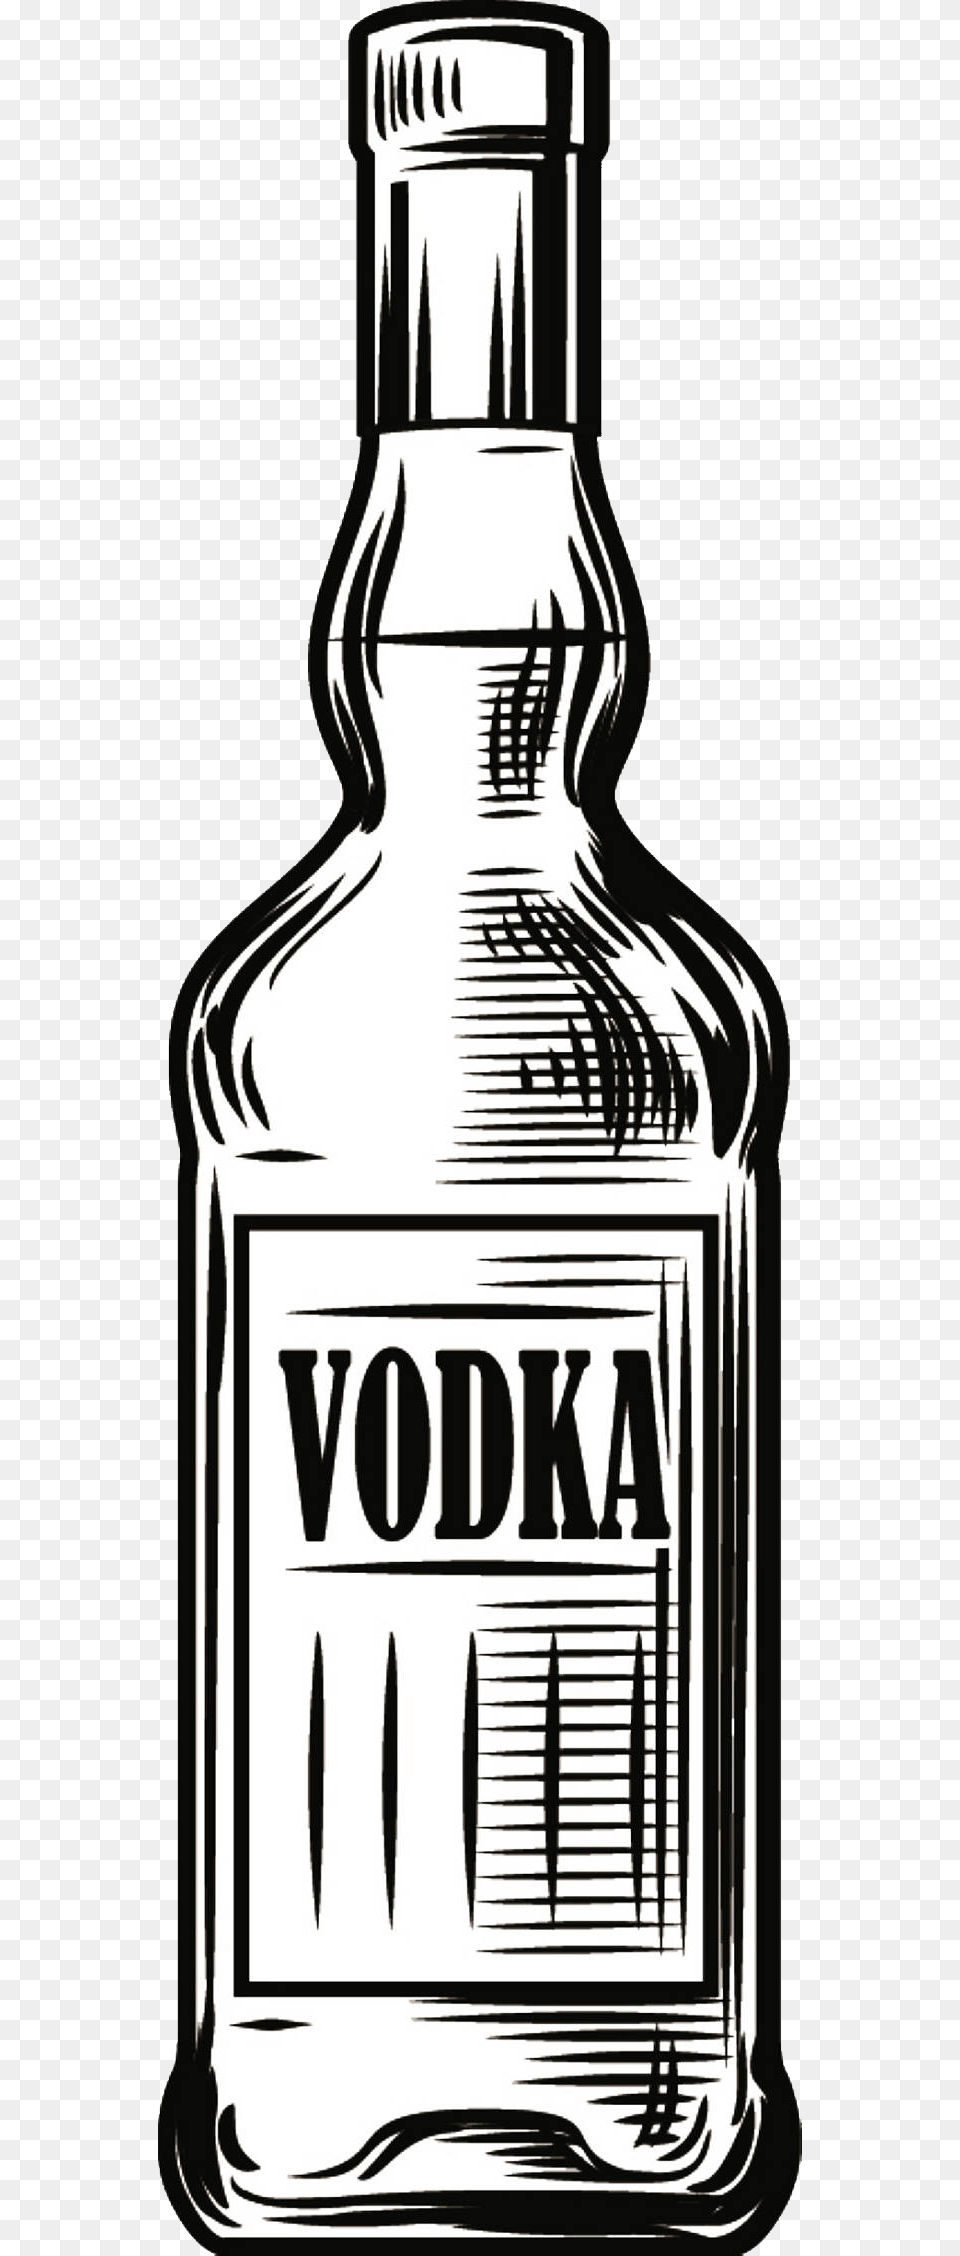 Vodka, Alcohol, Beverage, Gin, Liquor Png